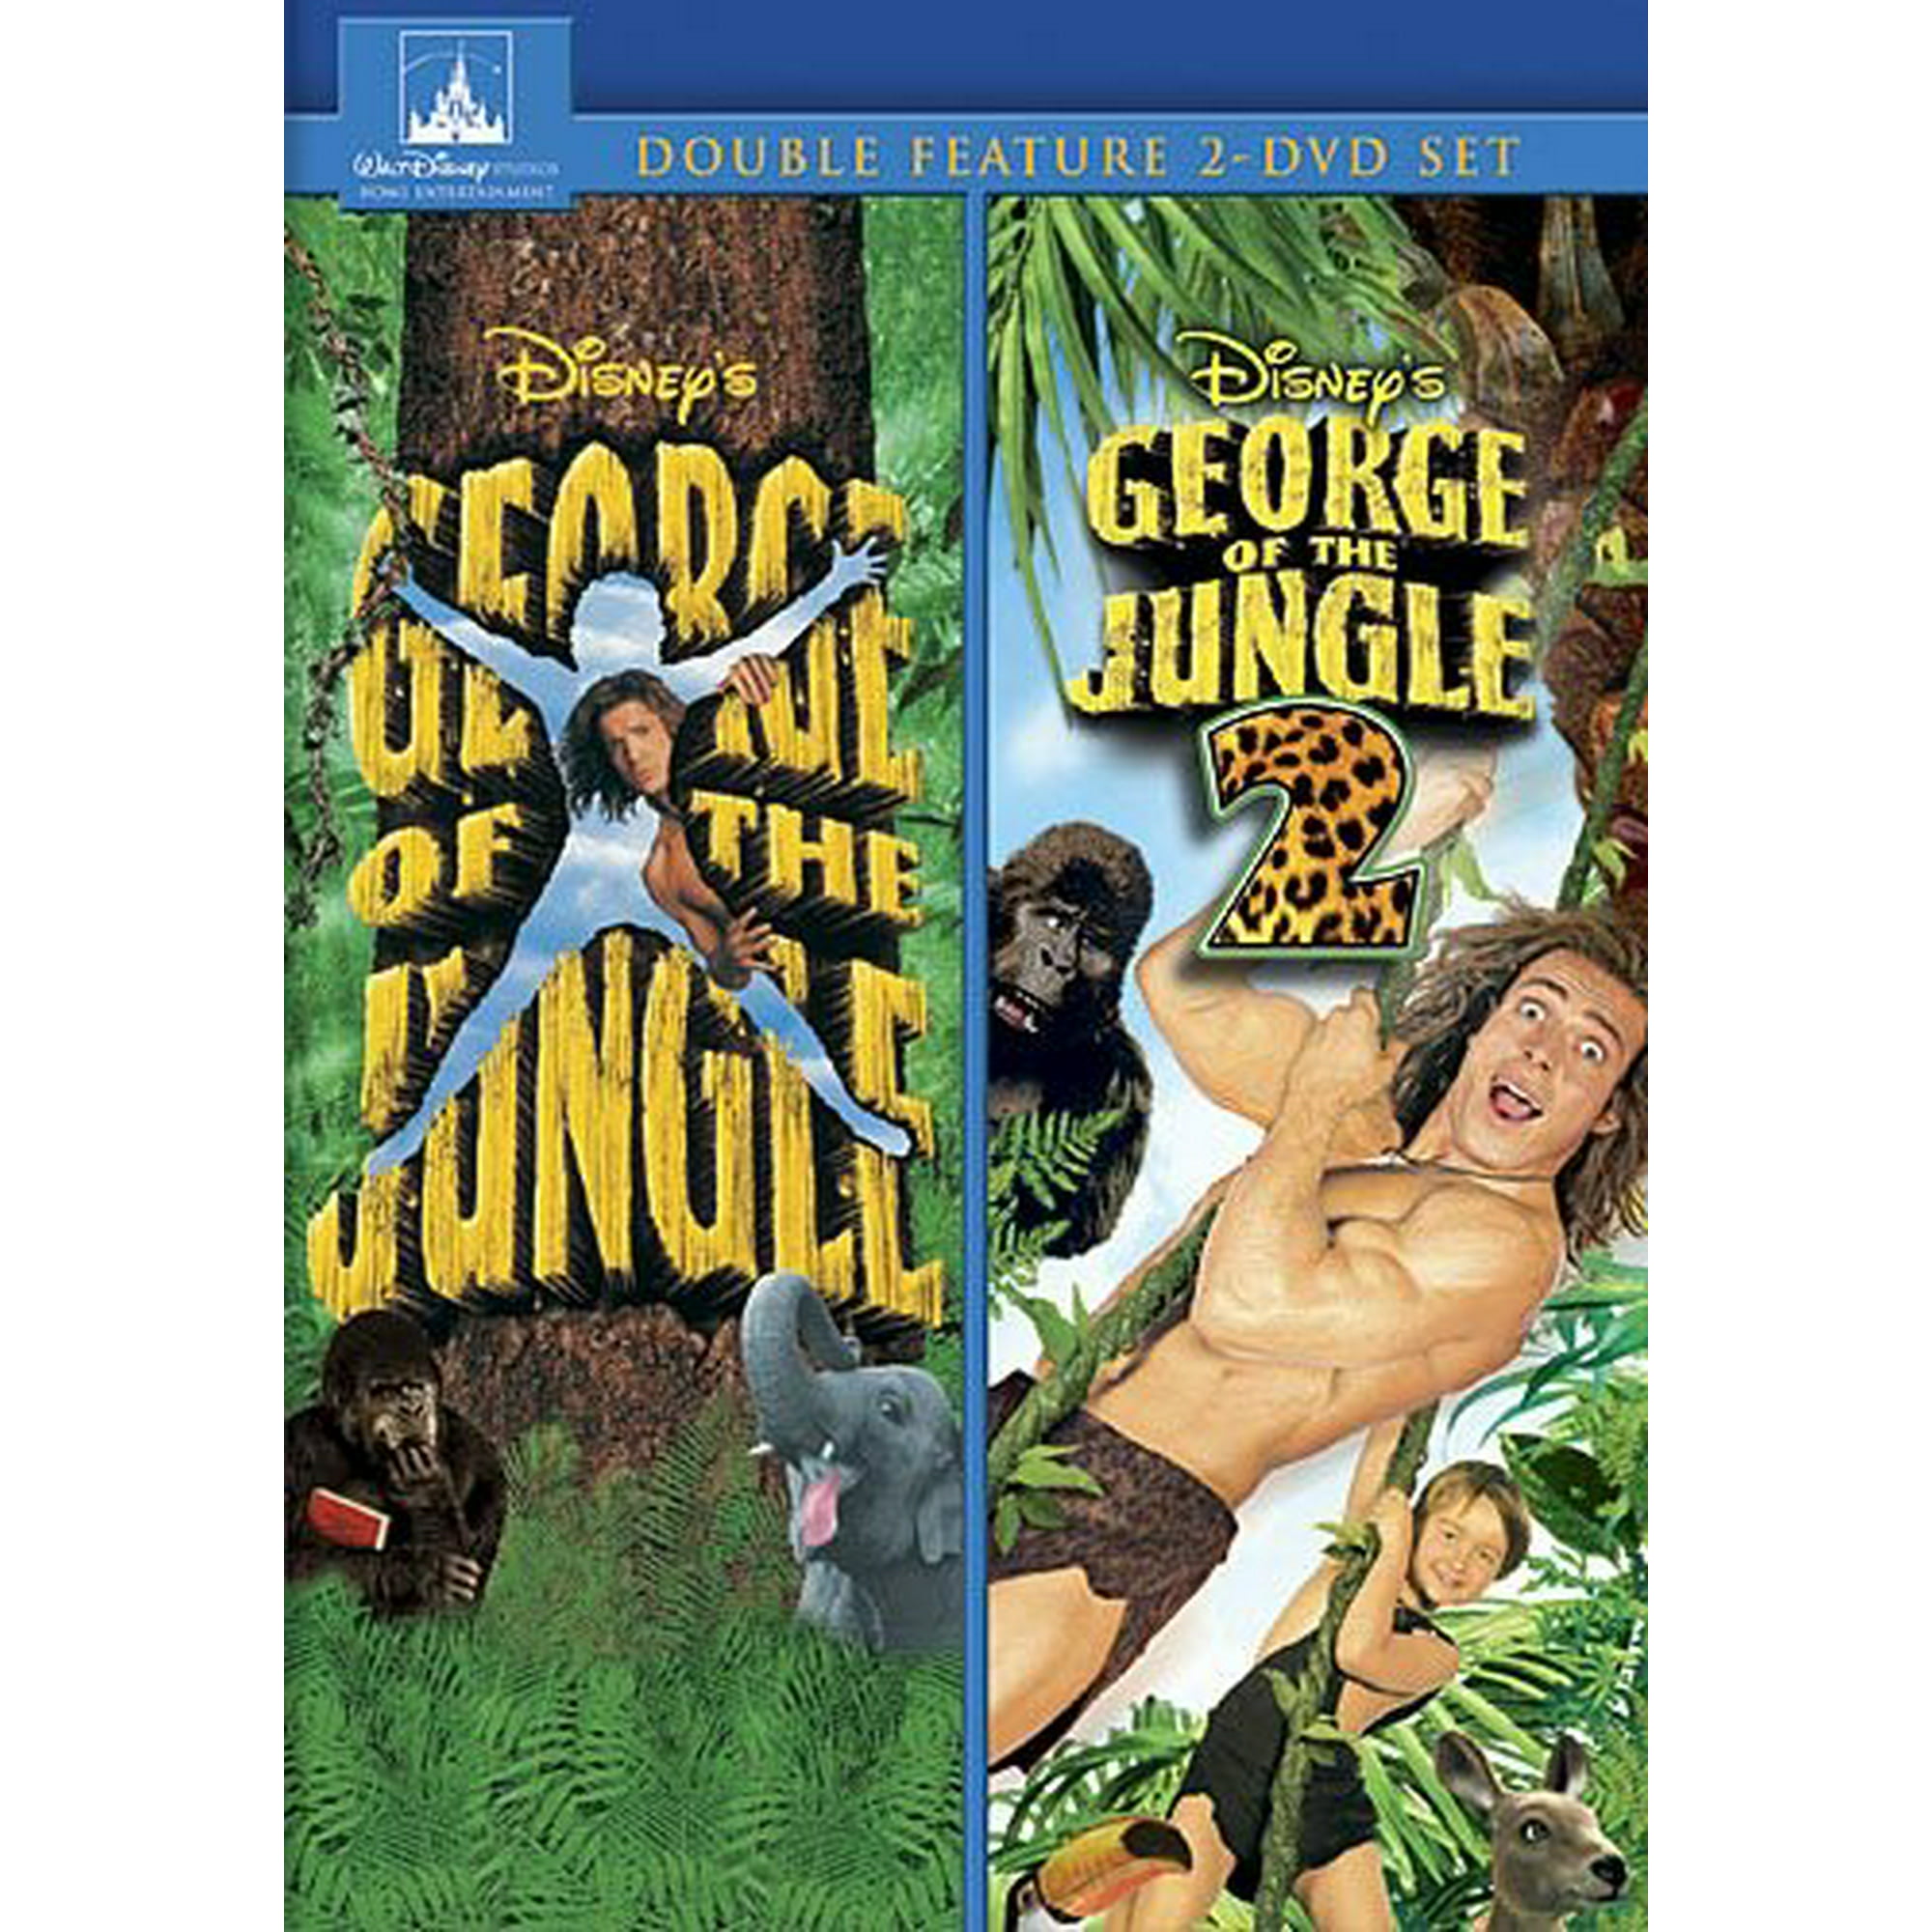 george of the jungle gorilla cartoon